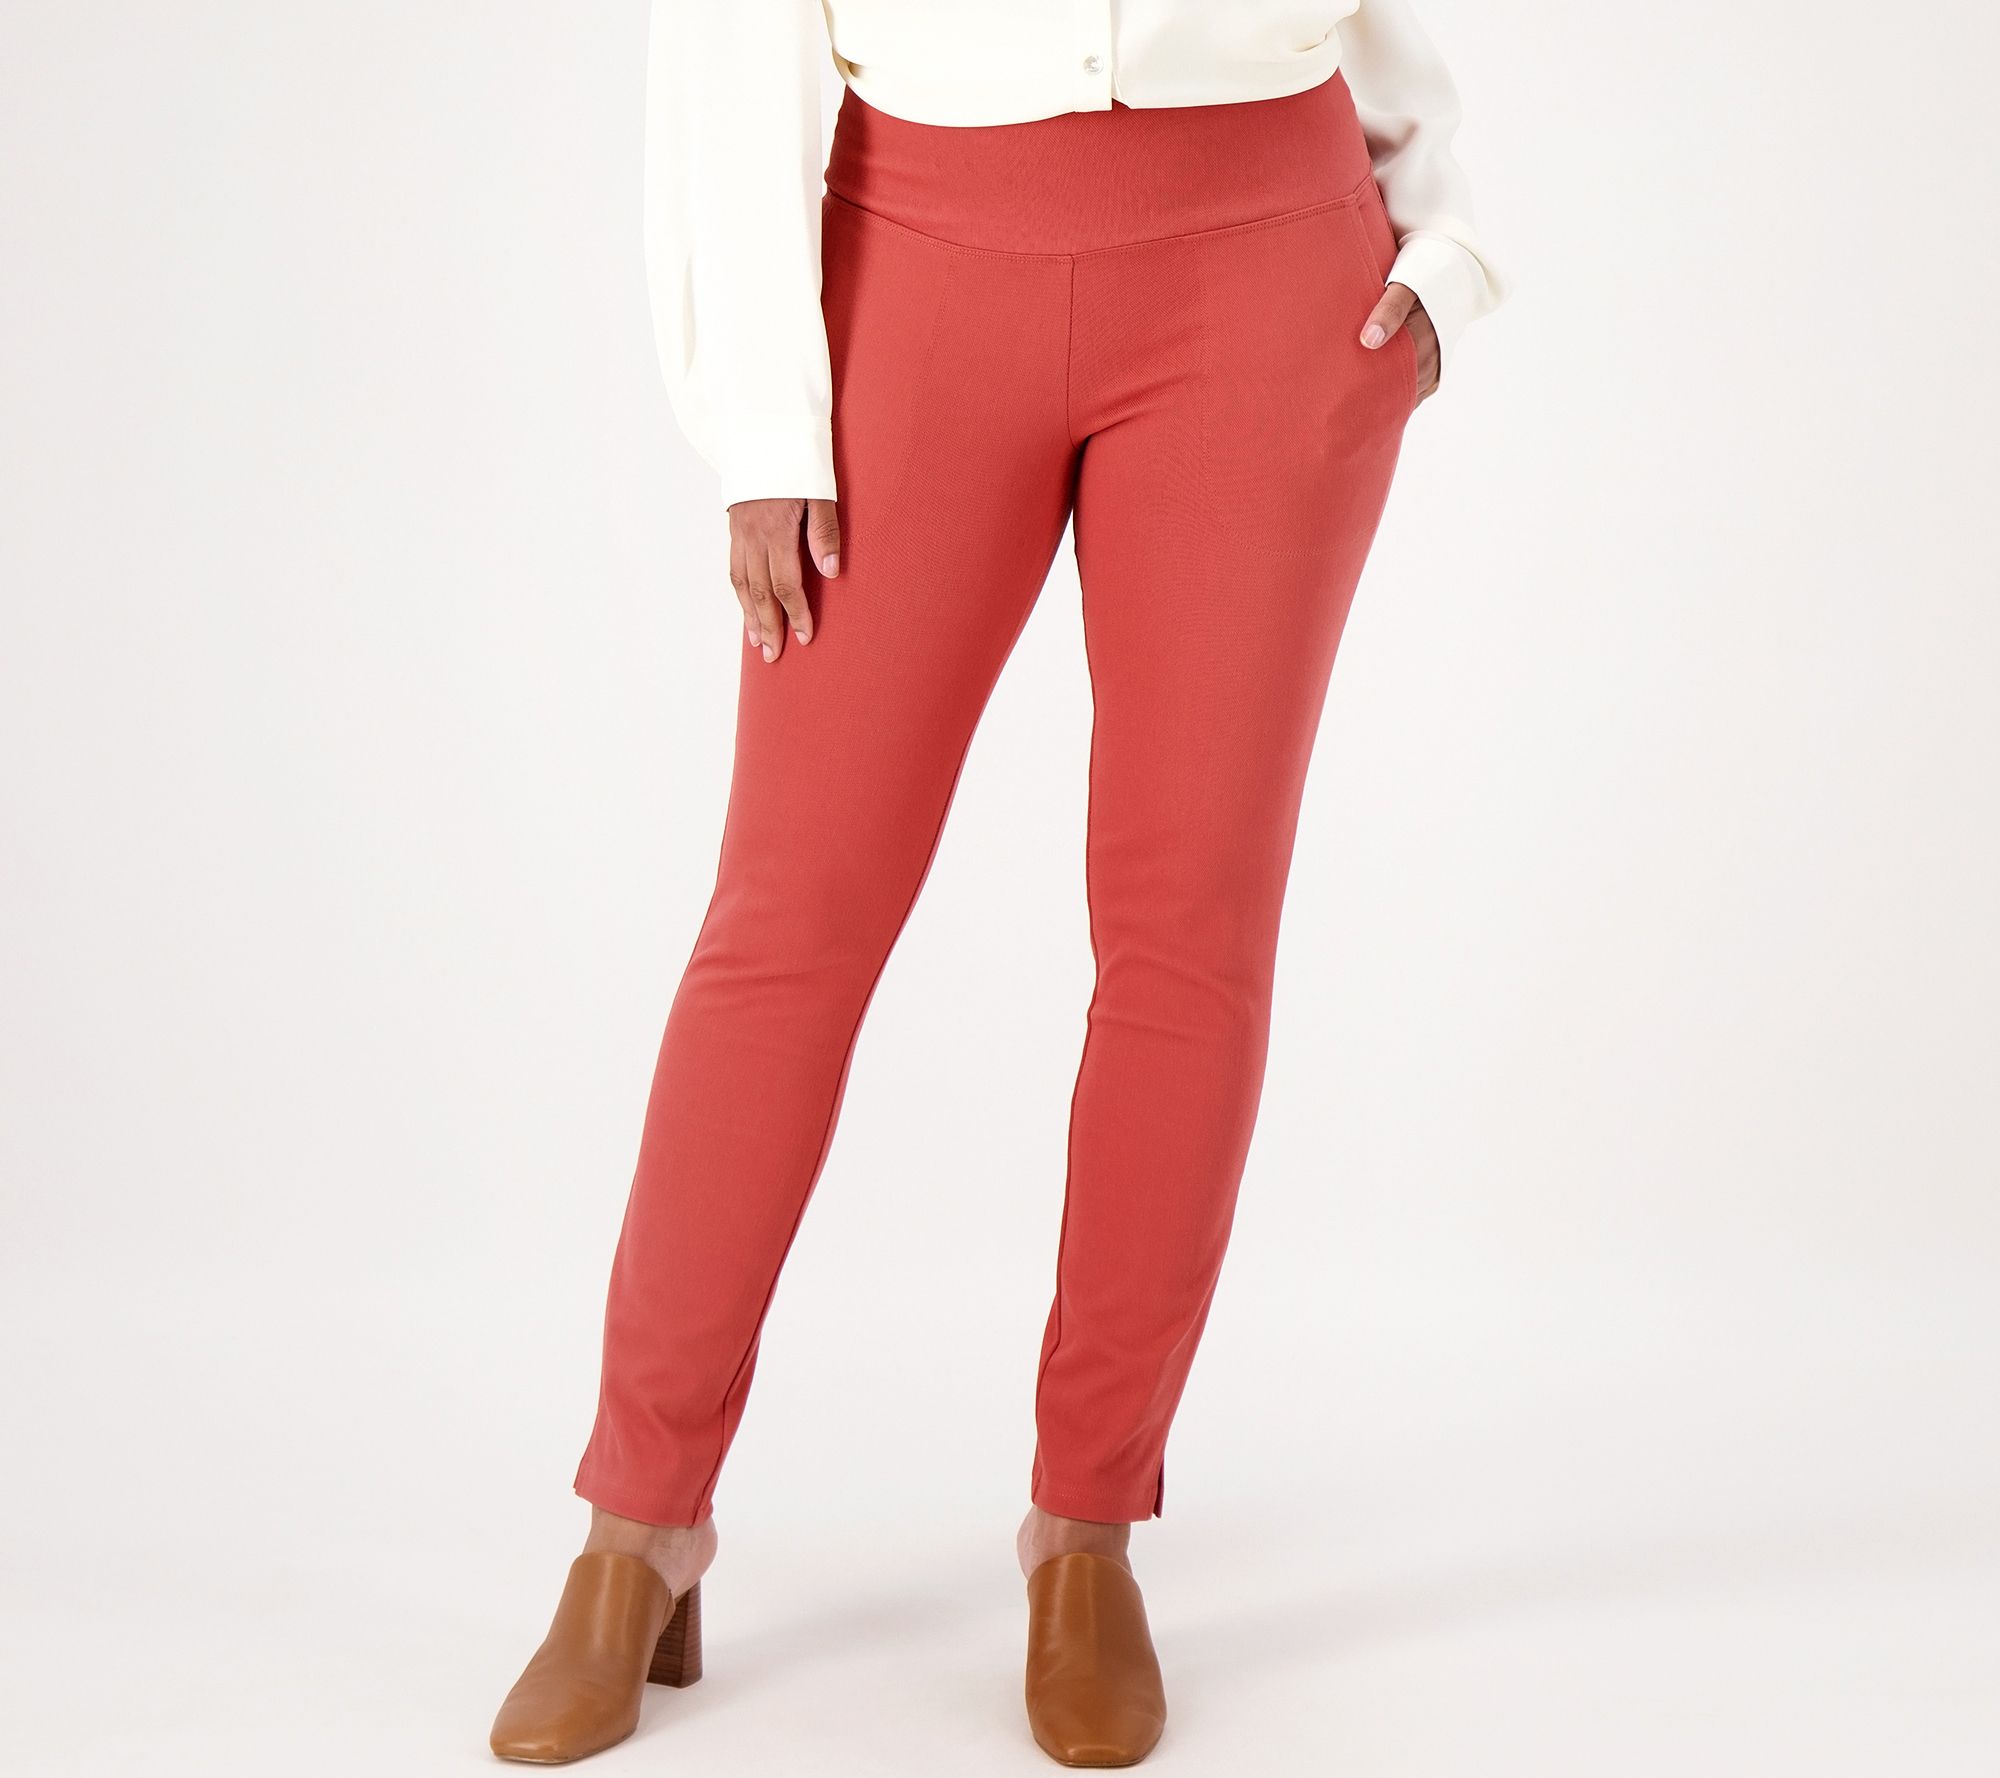 Primula Slim Fit Pants - White Stretch Cotton, Ankle-Length Leg